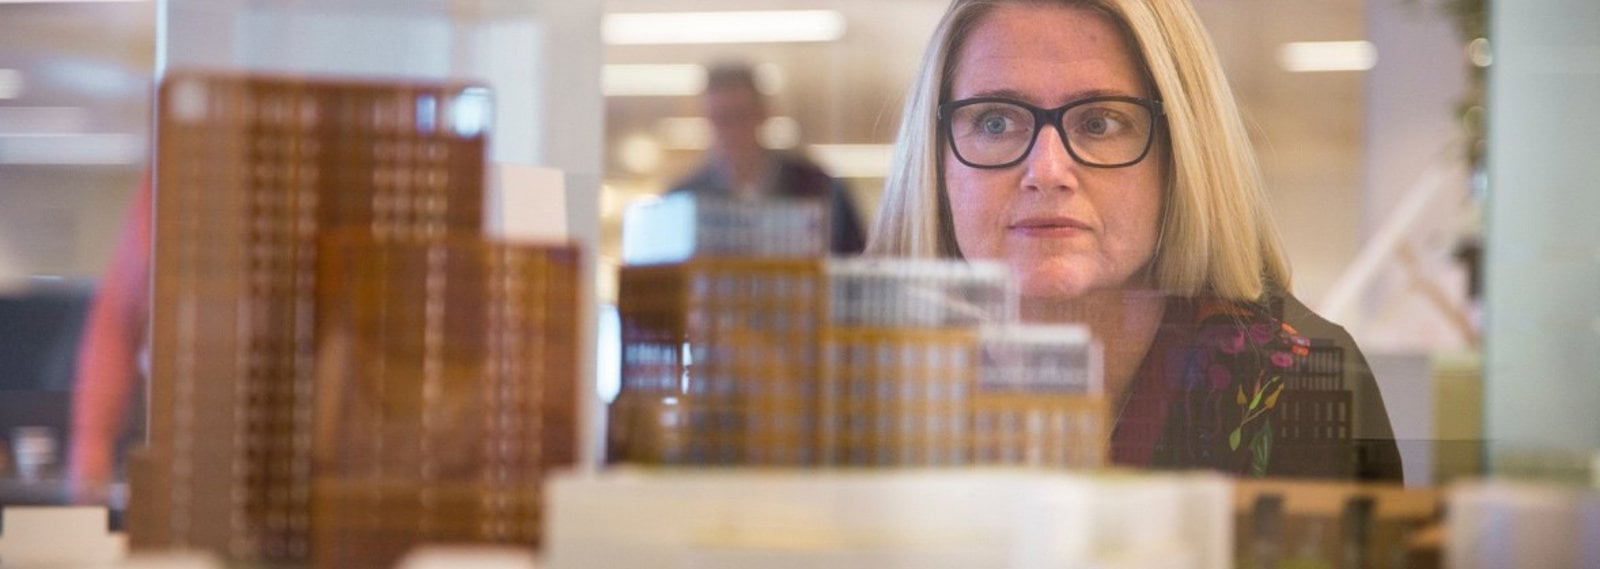 Unni Hofstad behind a scale model of office buildings